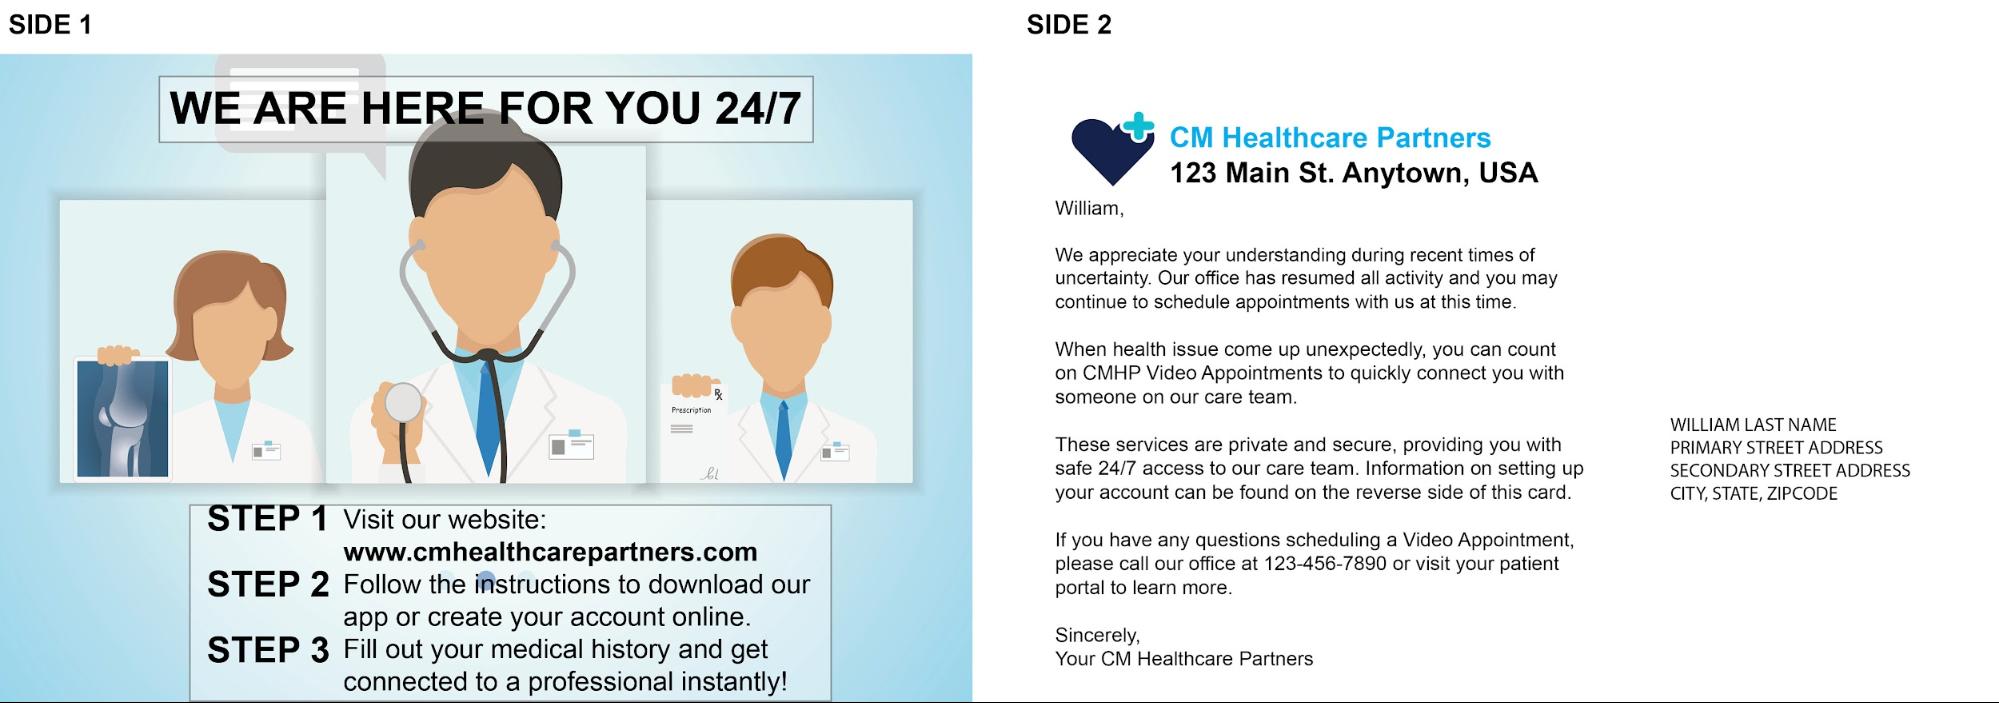 healthcare marketing template 3